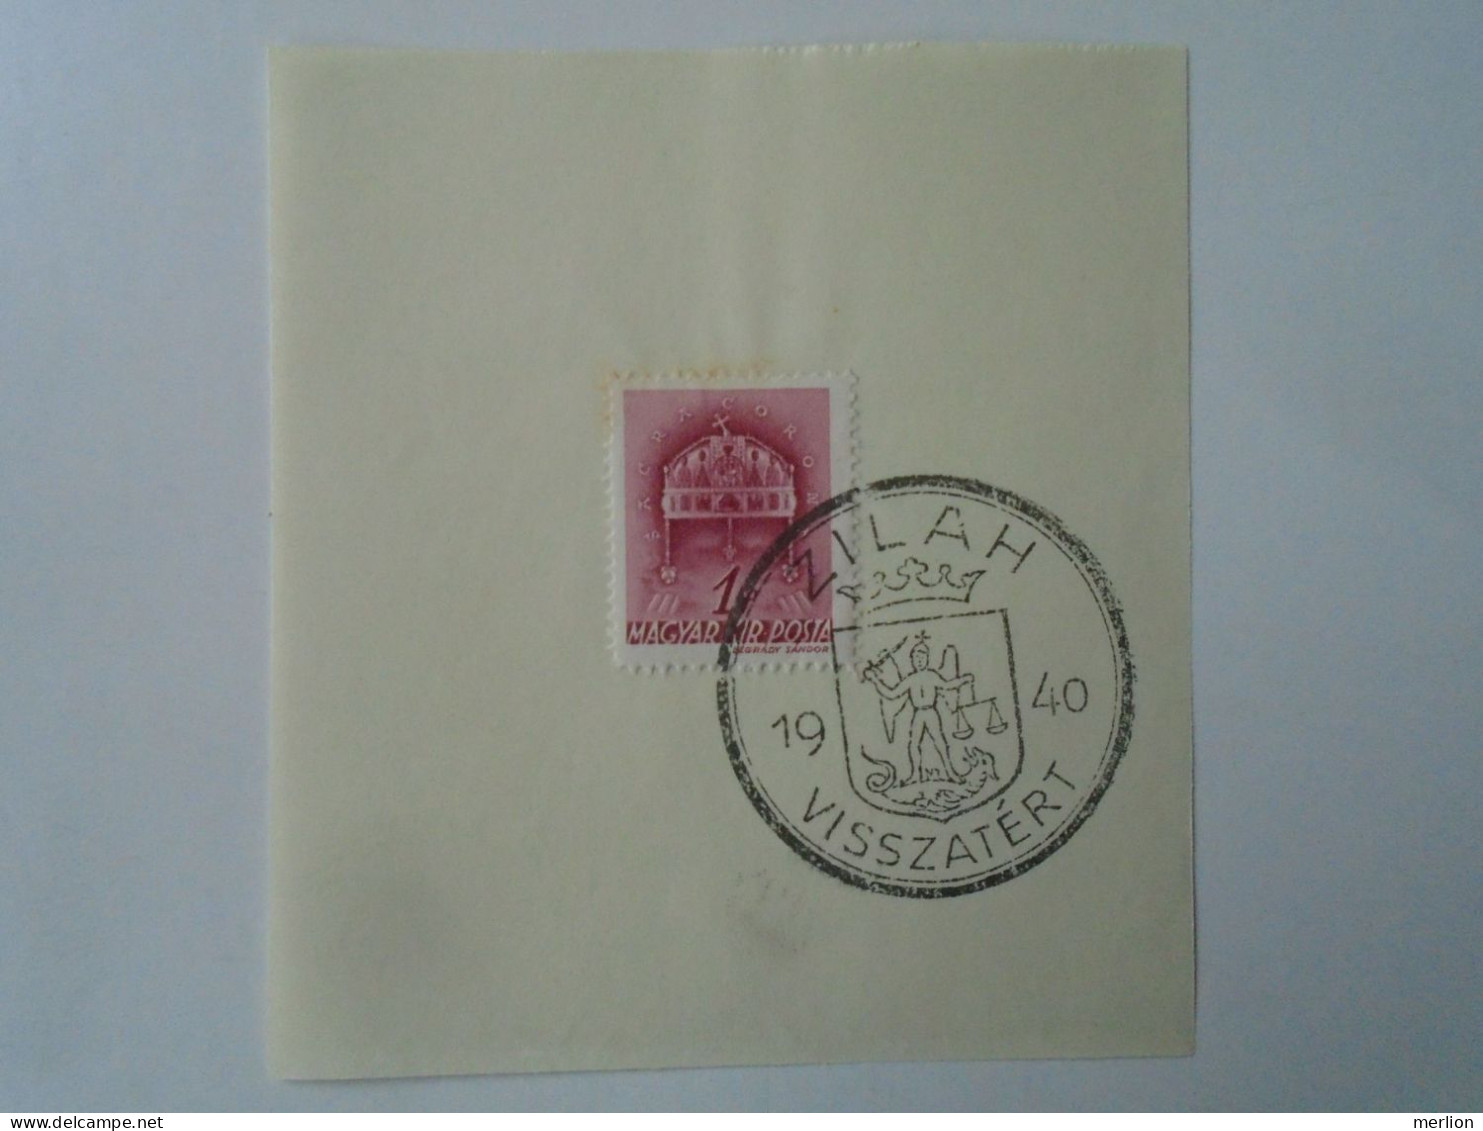 ZA451.61  Hungary -ZILAH - Visszatért -Commemorative Postmark 1940 - Postmark Collection